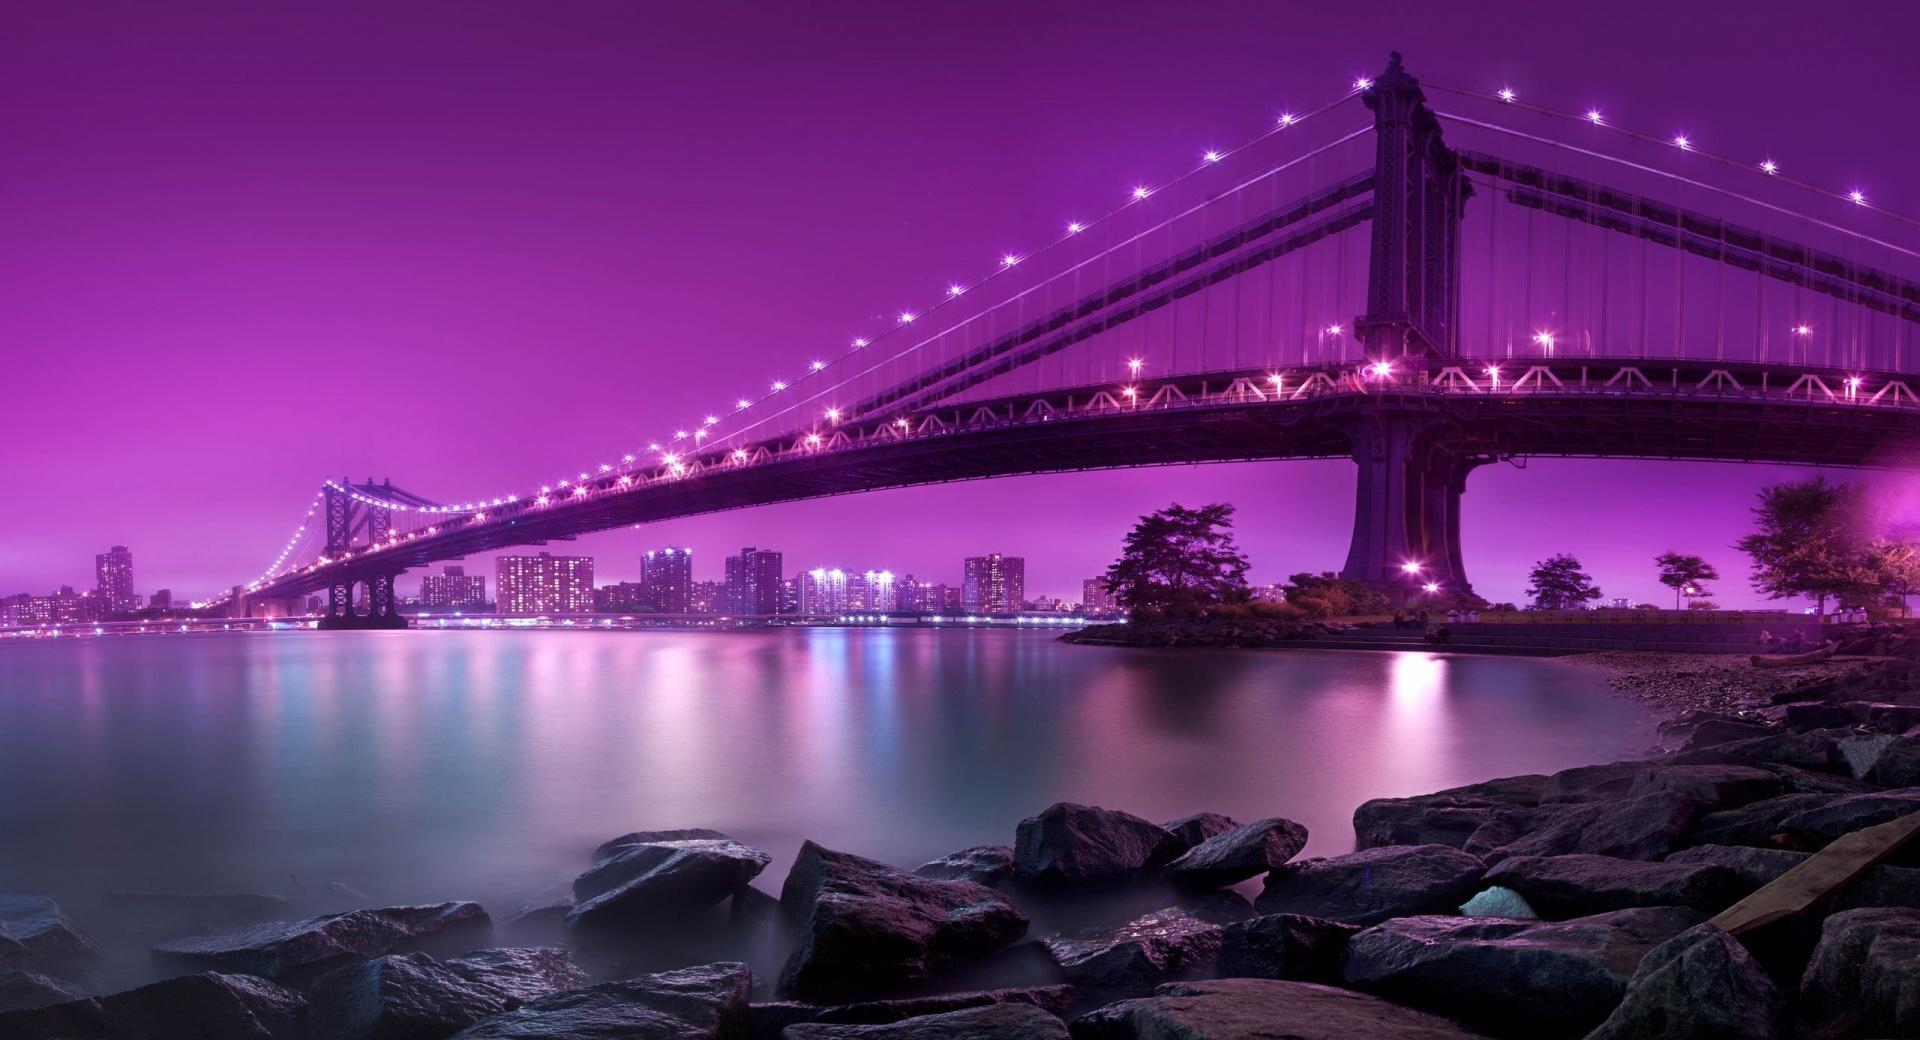 Bridge, Purple Light at 1280 x 960 size wallpapers HD quality